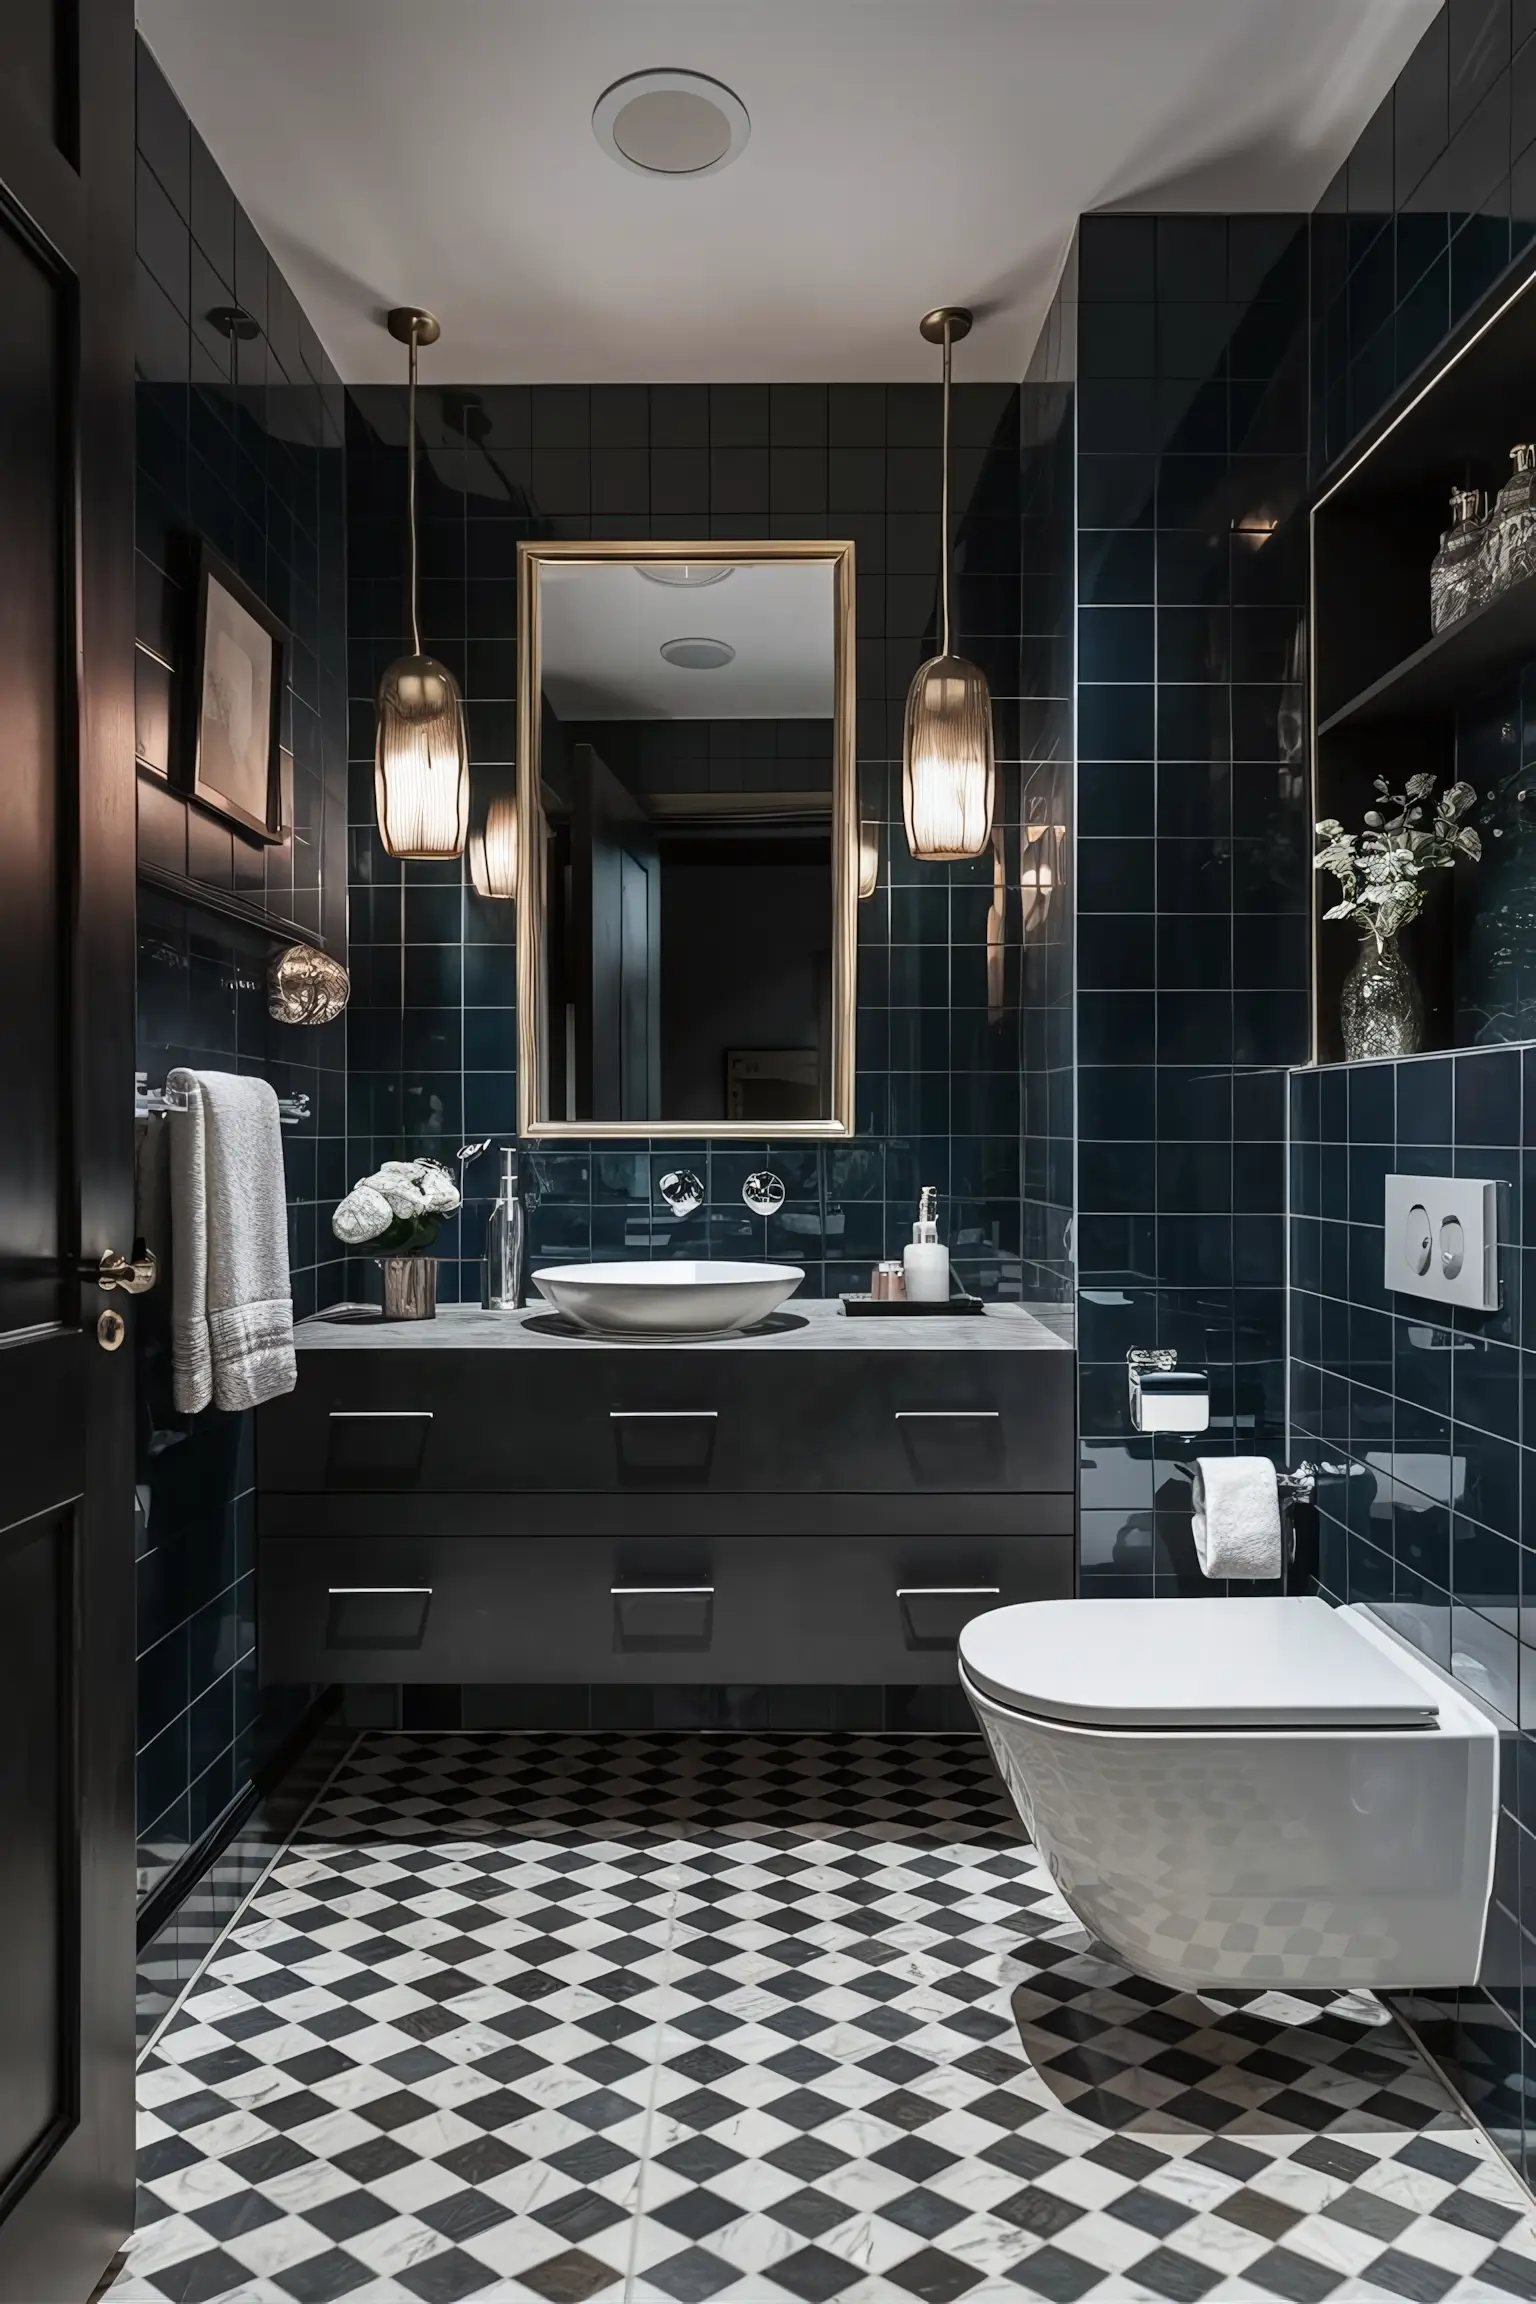 Black-themed bathroom with bold black decor and sleek fixtures.